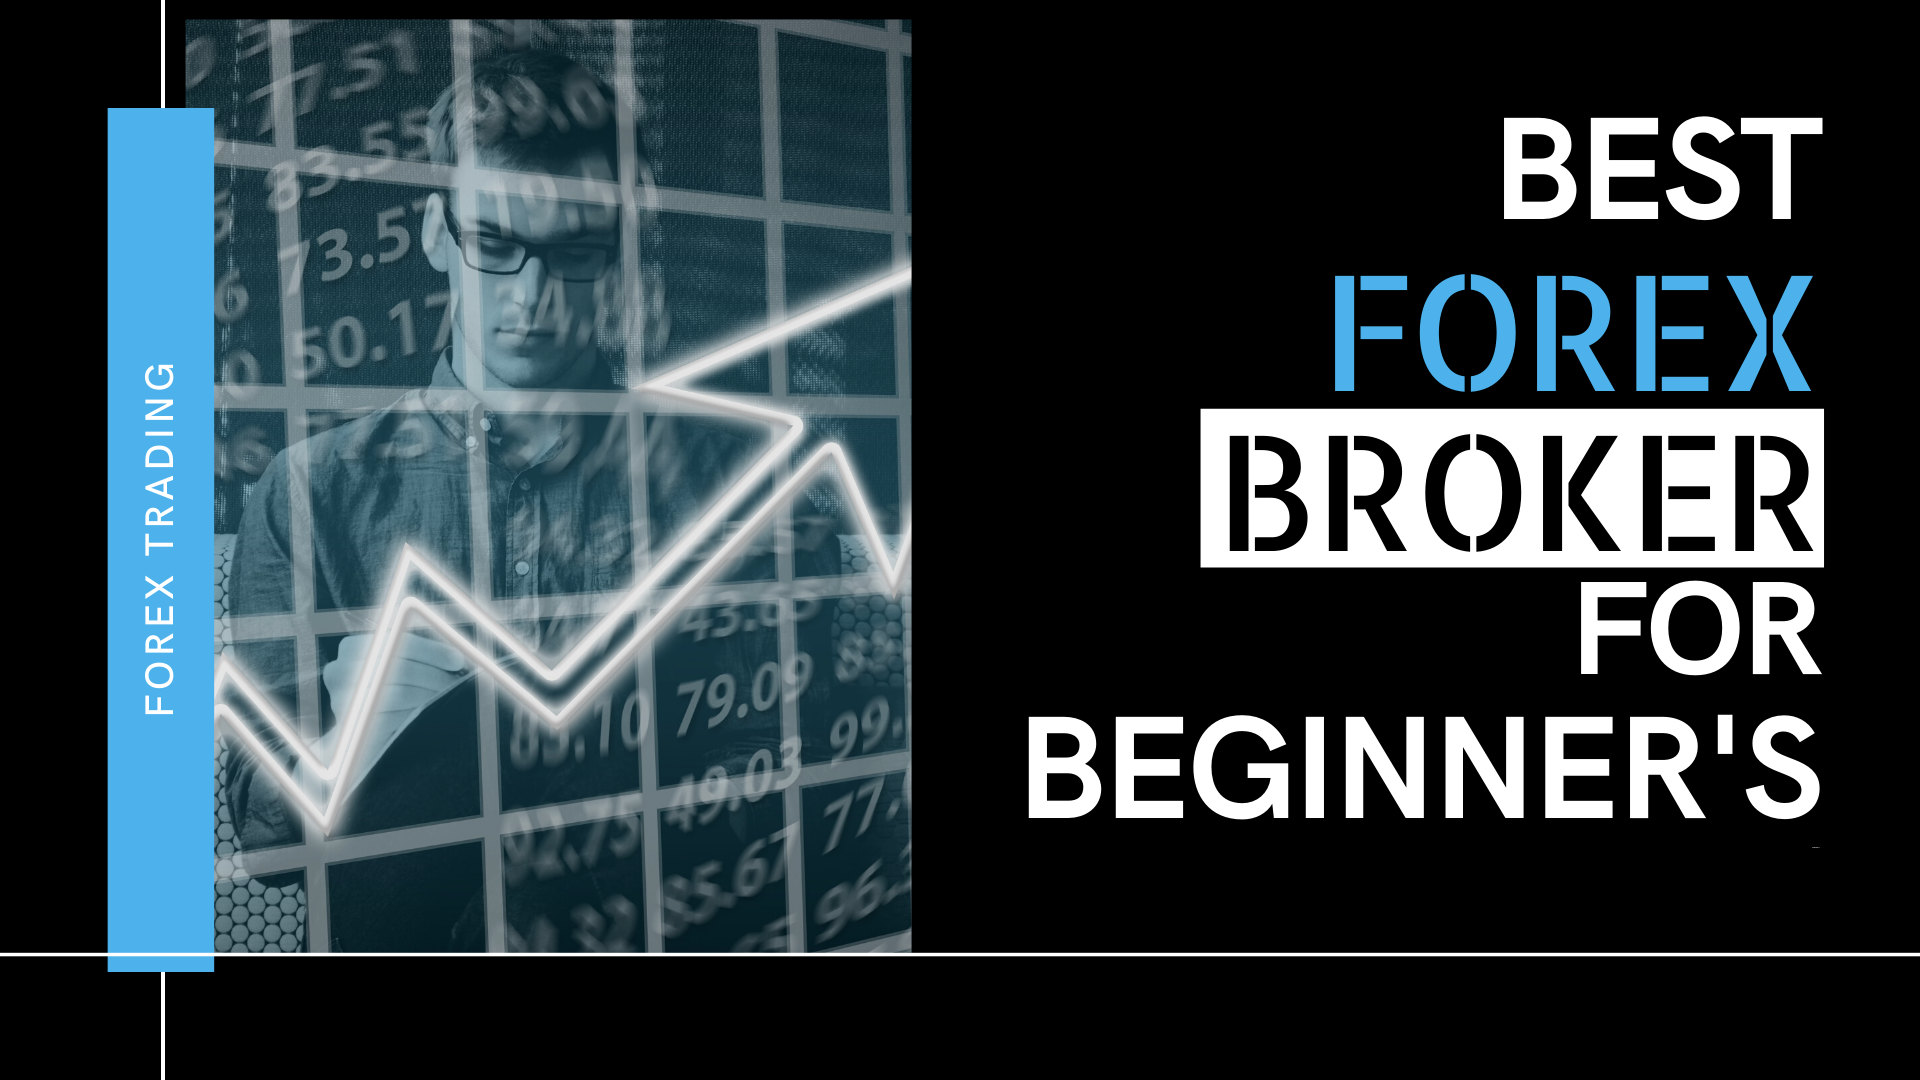 Top forex brokers in india